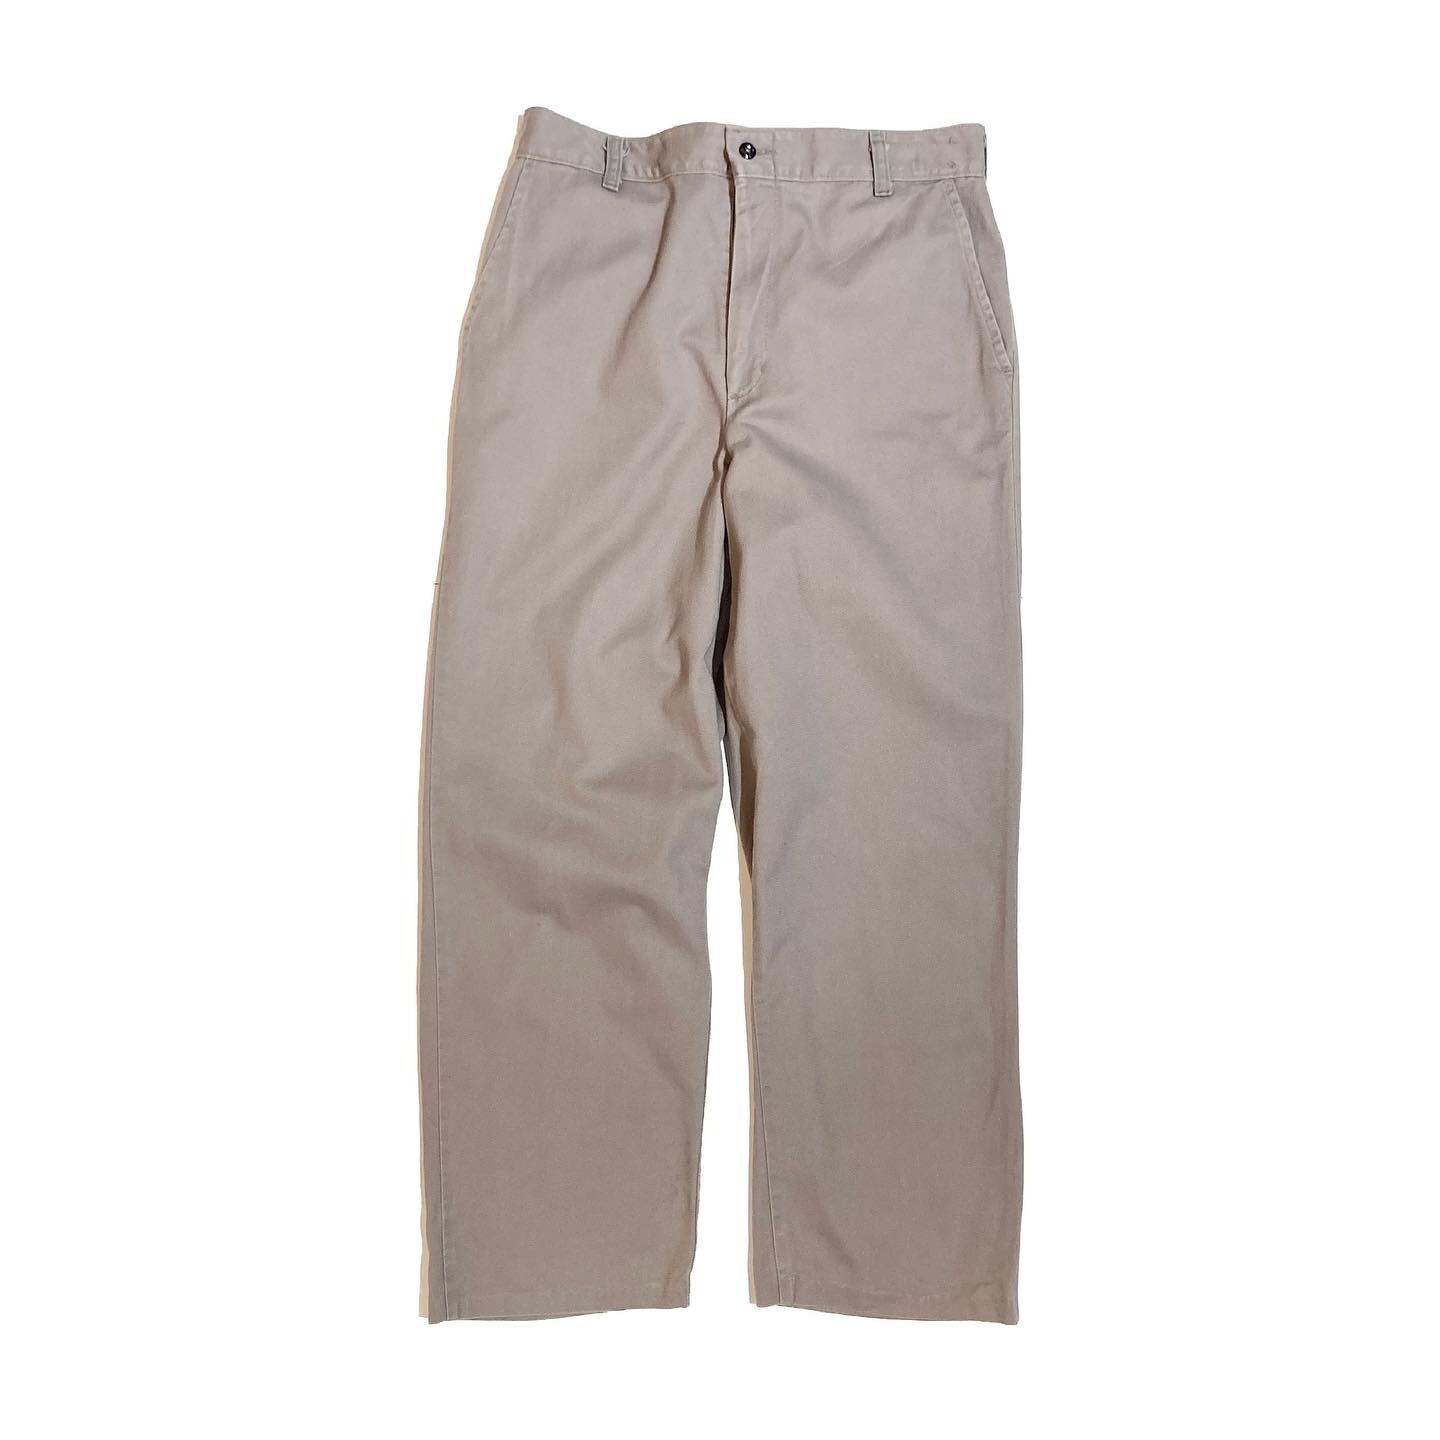 Aramark Work Pants Size 30x30  eBay